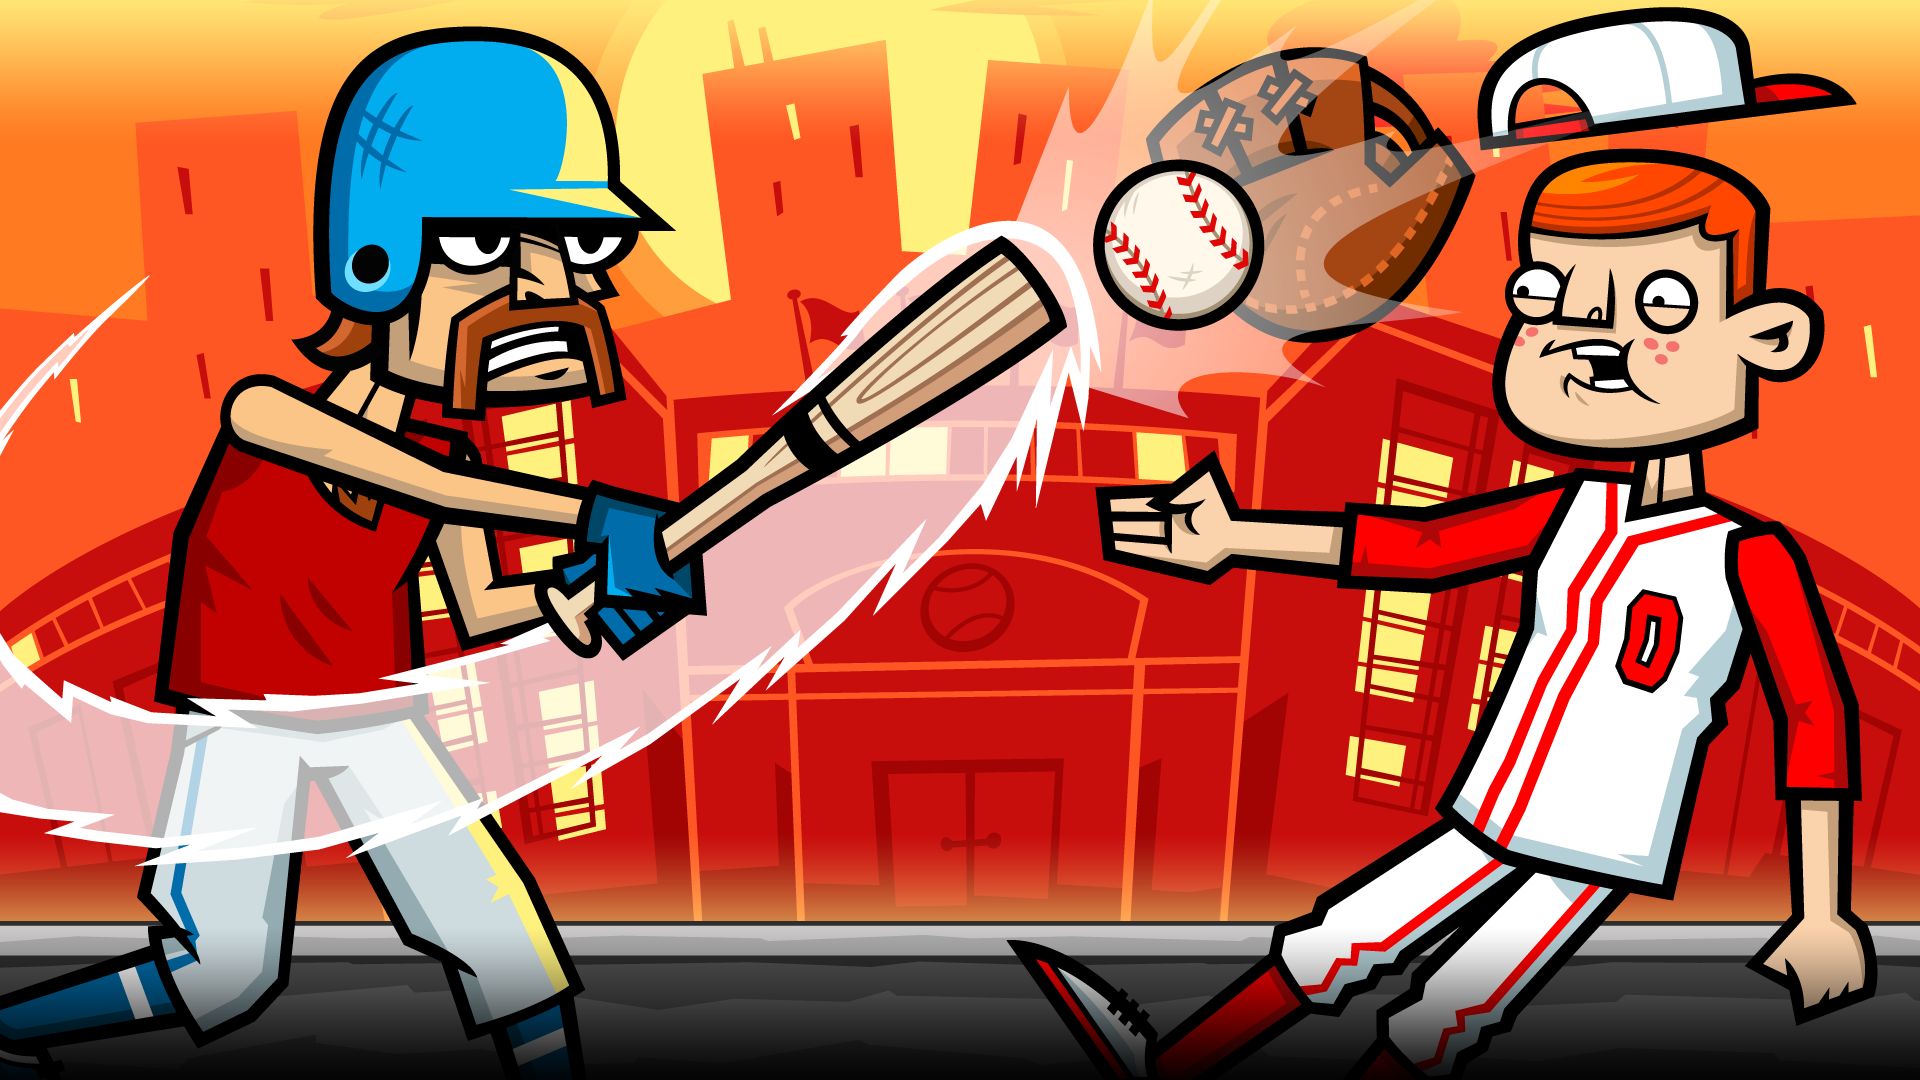 Baseball Riot cover image